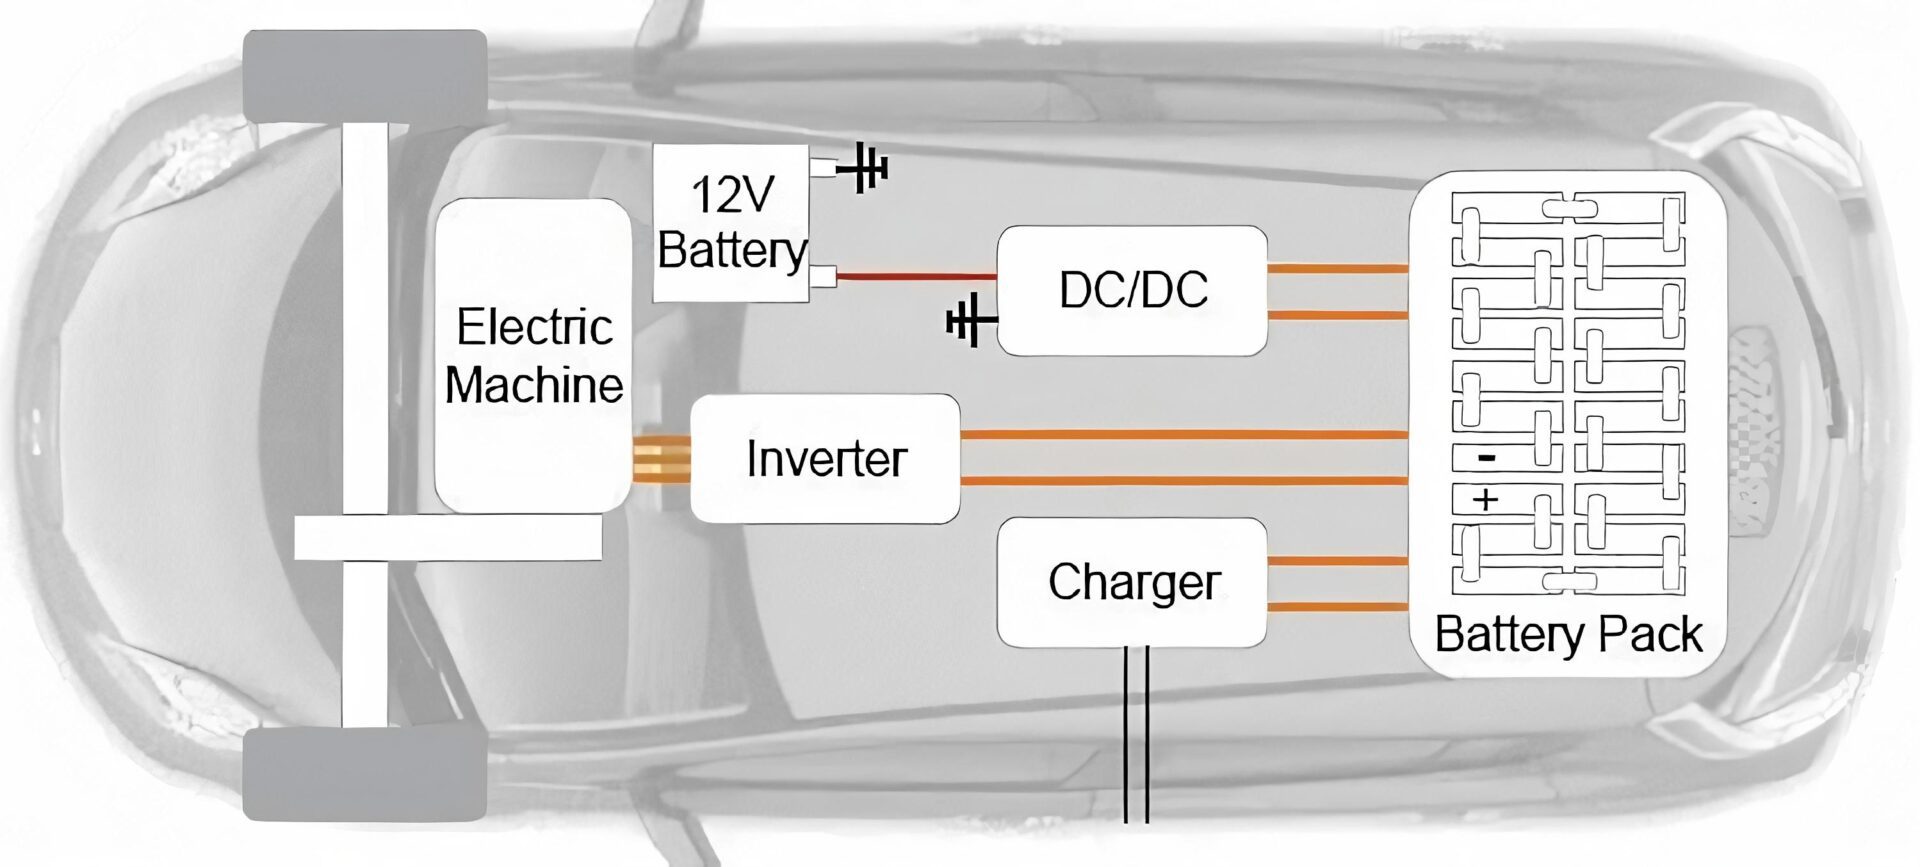 Electric Vehicle Architecture & EV Powertrain Components EVehicleinfo